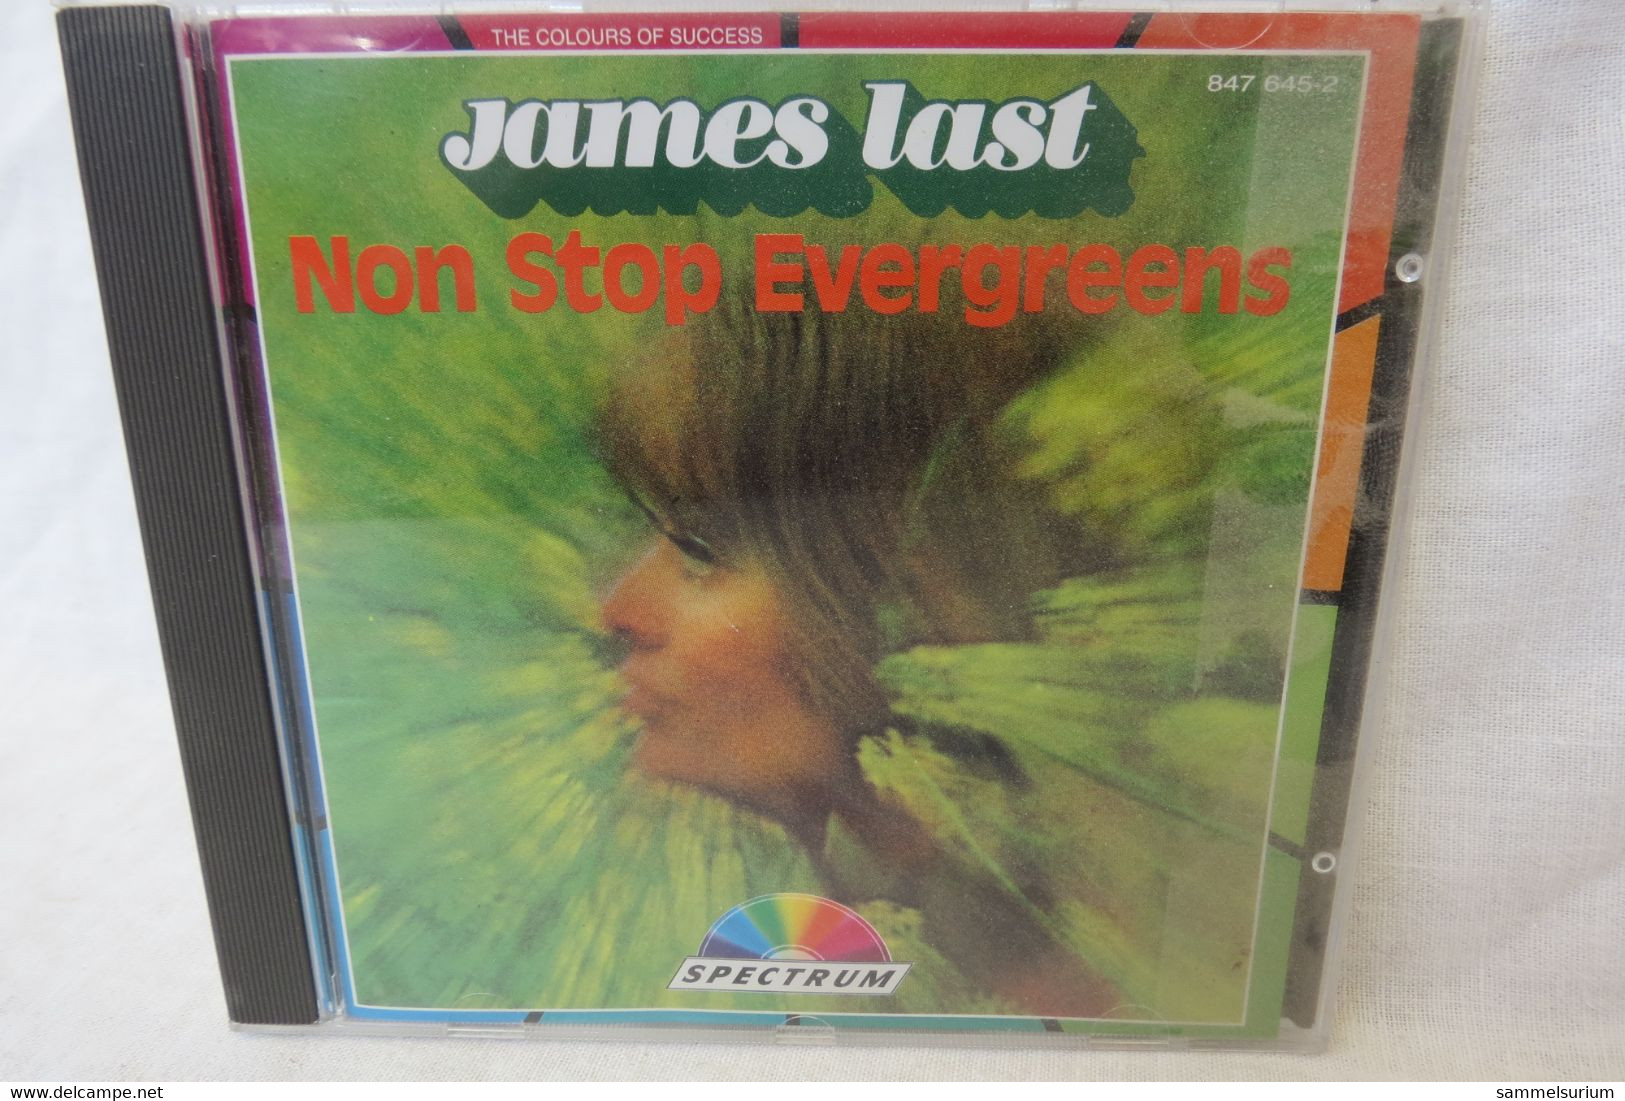 CD "James Last" Non Stop Evergreen - Instrumental